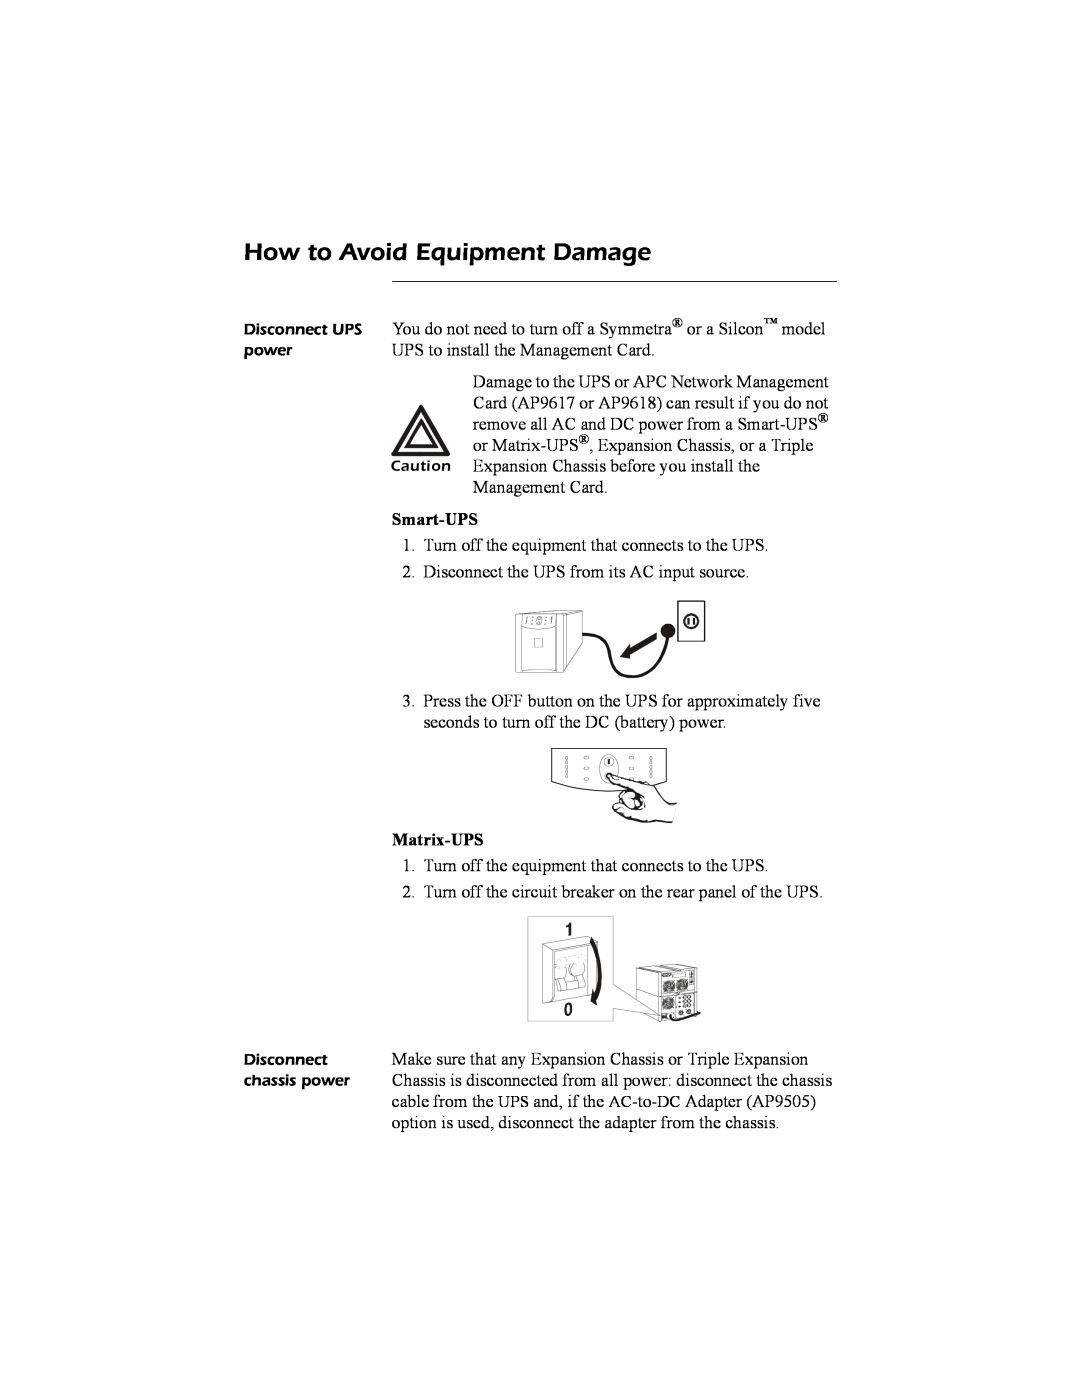 APC AP9617 quick start manual How to Avoid Equipment Damage, Smart-UPS, Matrix-UPS 